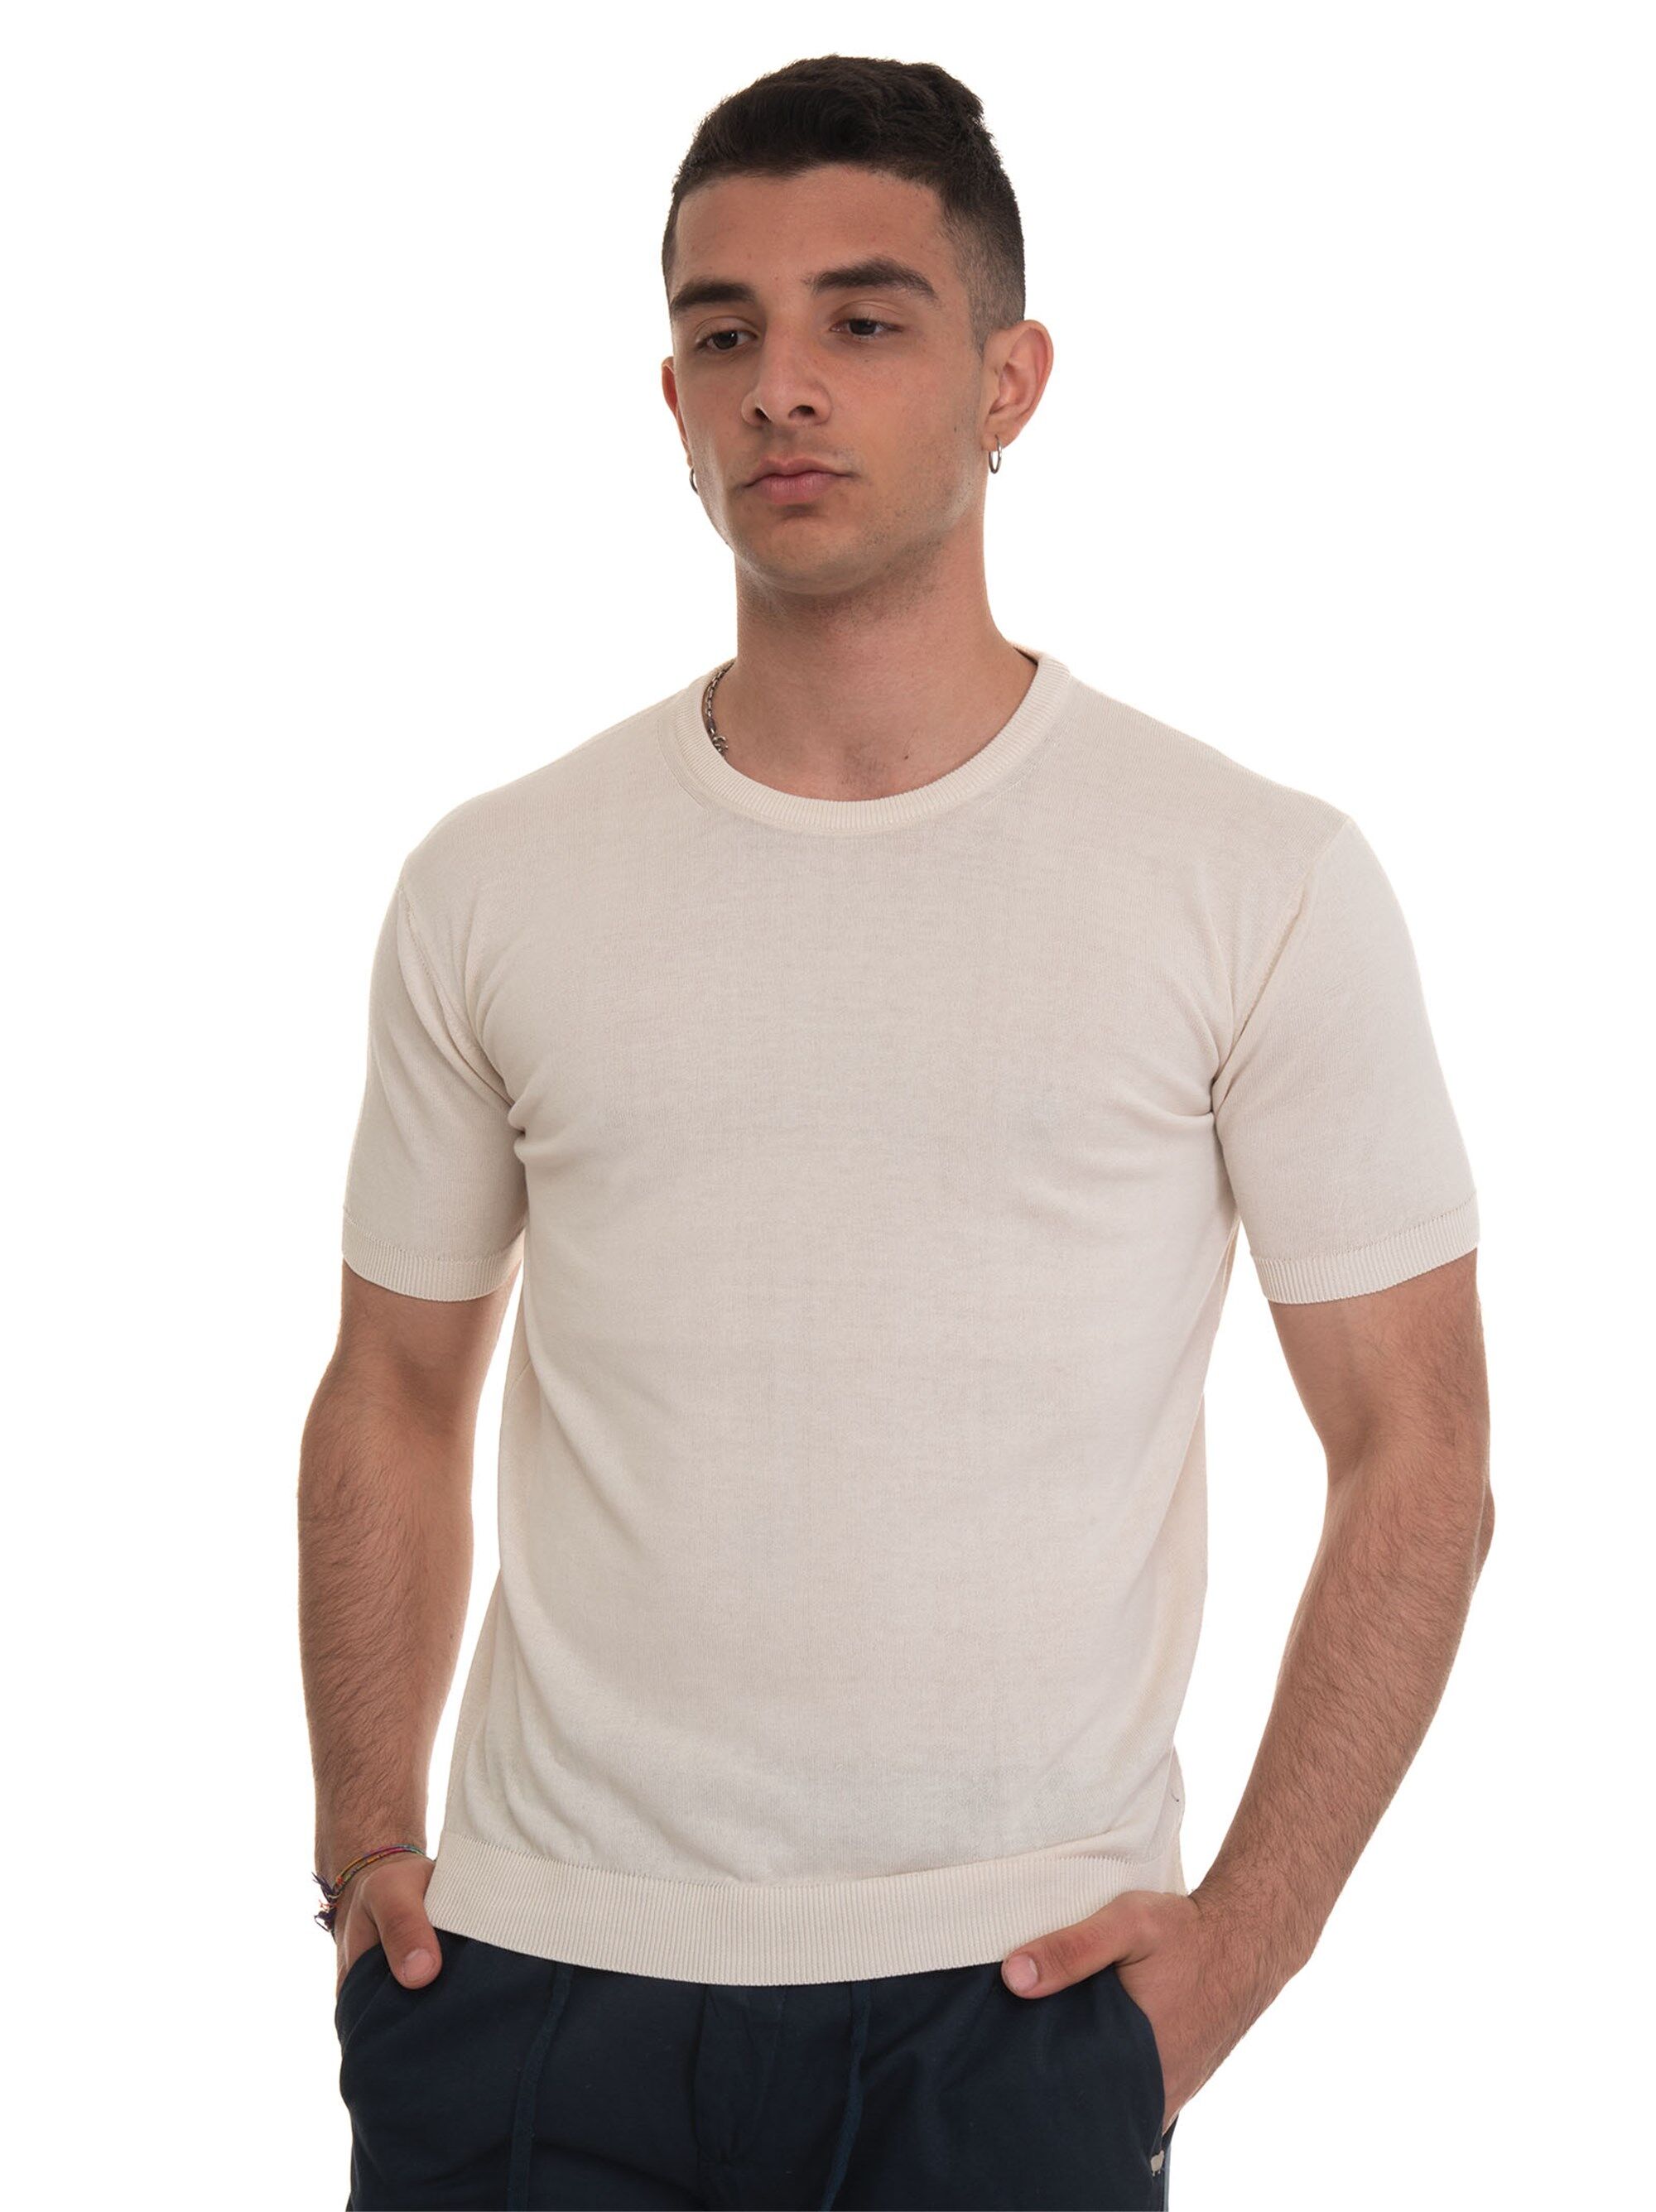 Detwelve T-shirt girocollo Beige Uomo XL